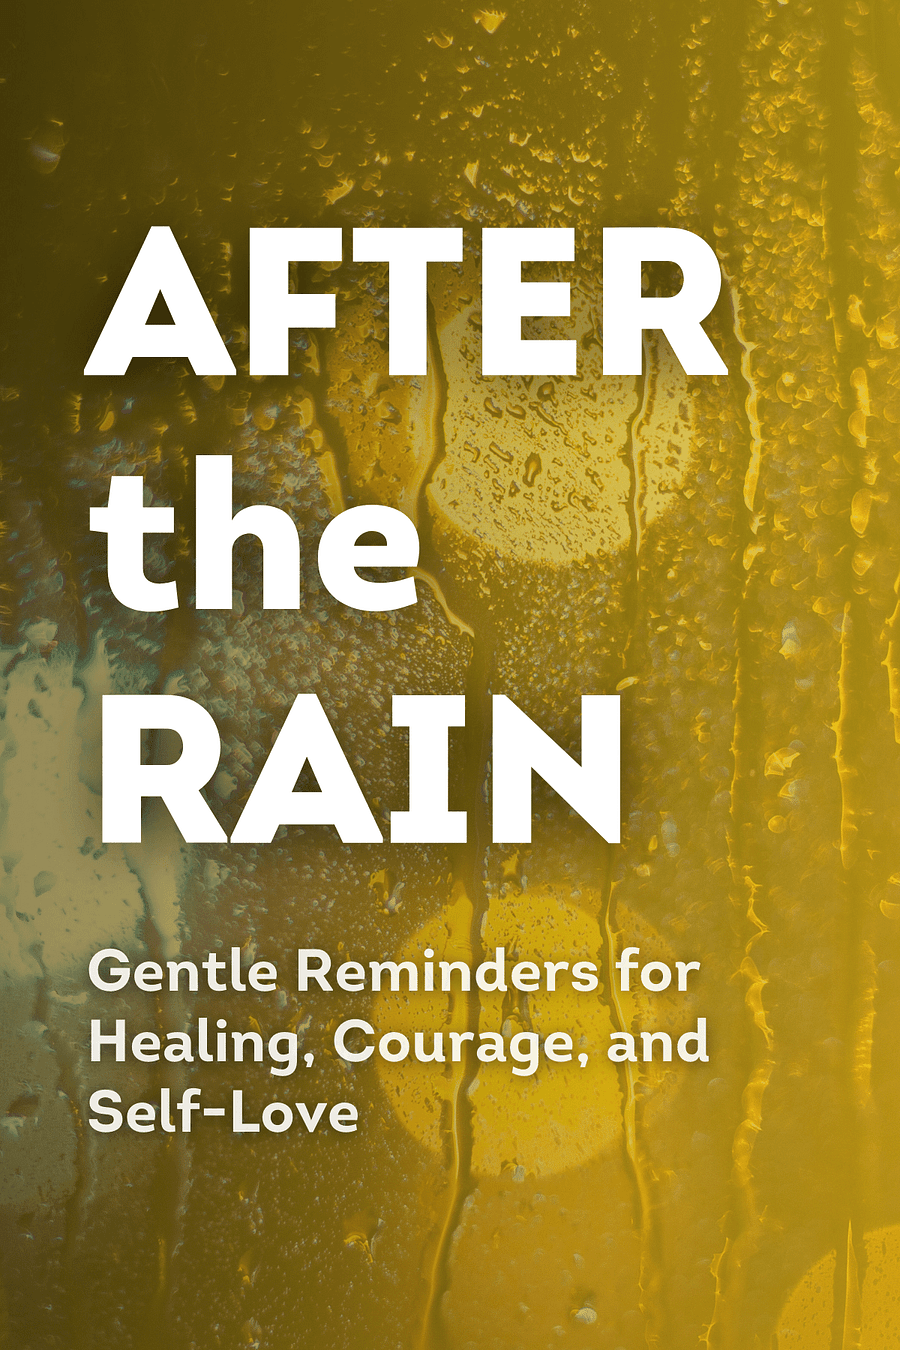 After the Rain by Alexandra Elle - Book Summary